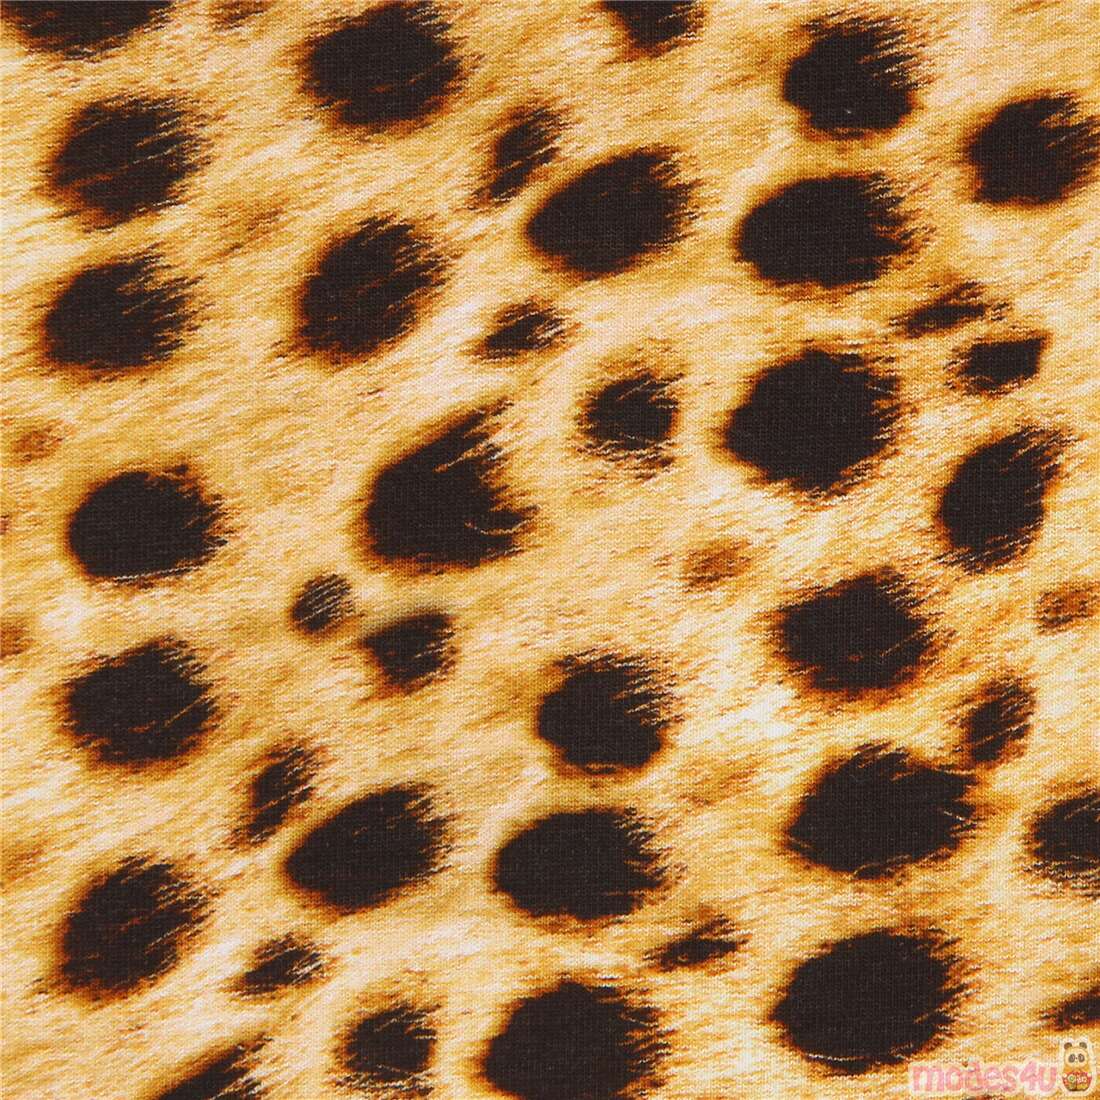 Leopard print fabric - cheetah print Wallpaper